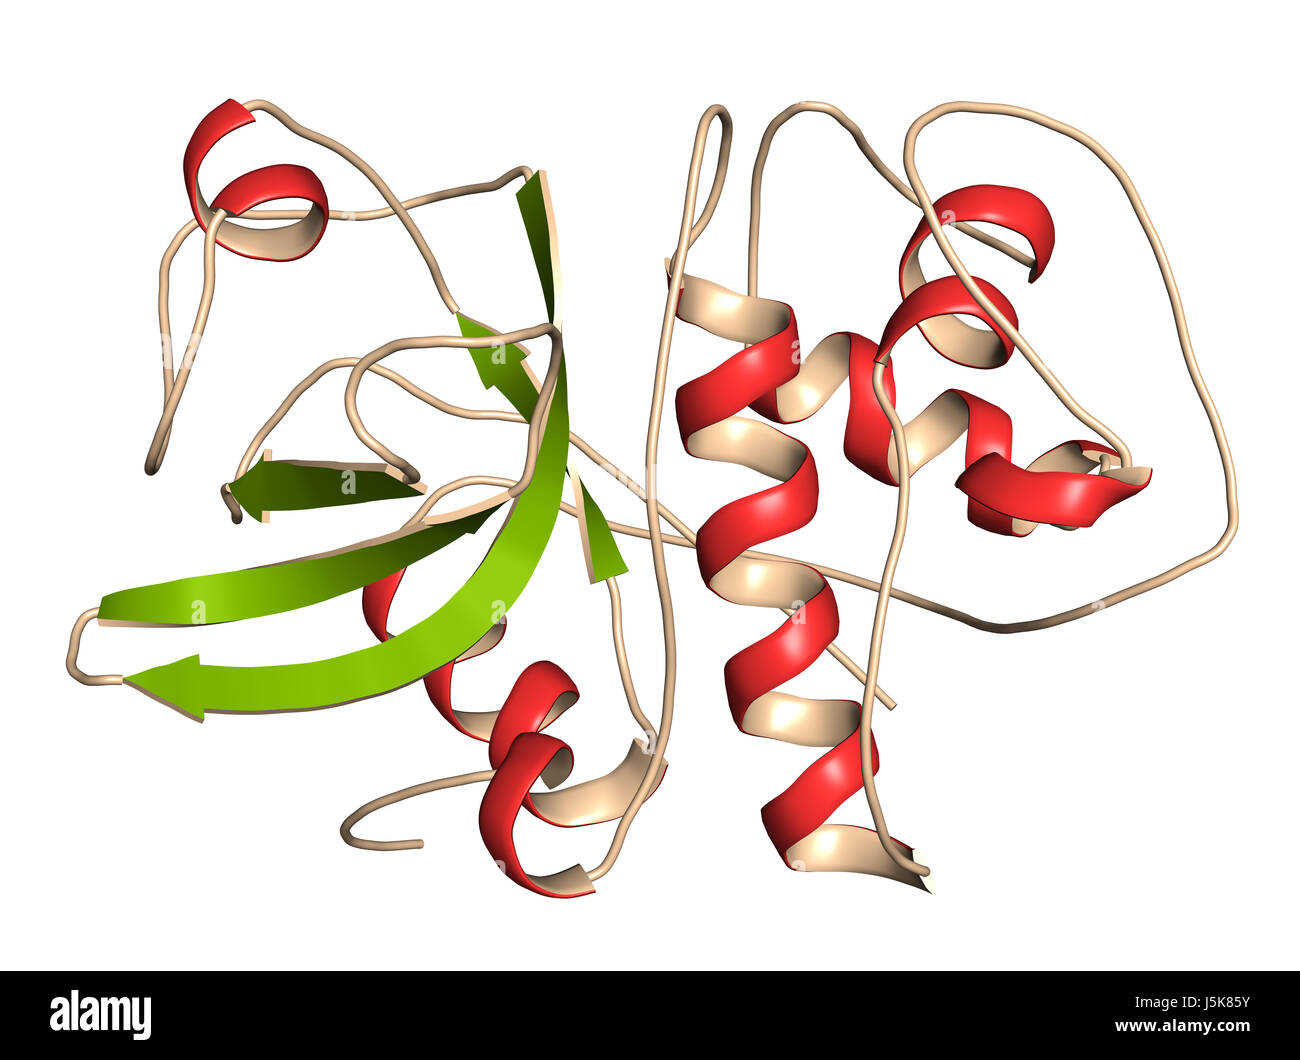 Cathepsin K enzyme bound to the inhibitor odanacatib. 3D rendering based on protein data bank entry 5tdi. Stock Photo